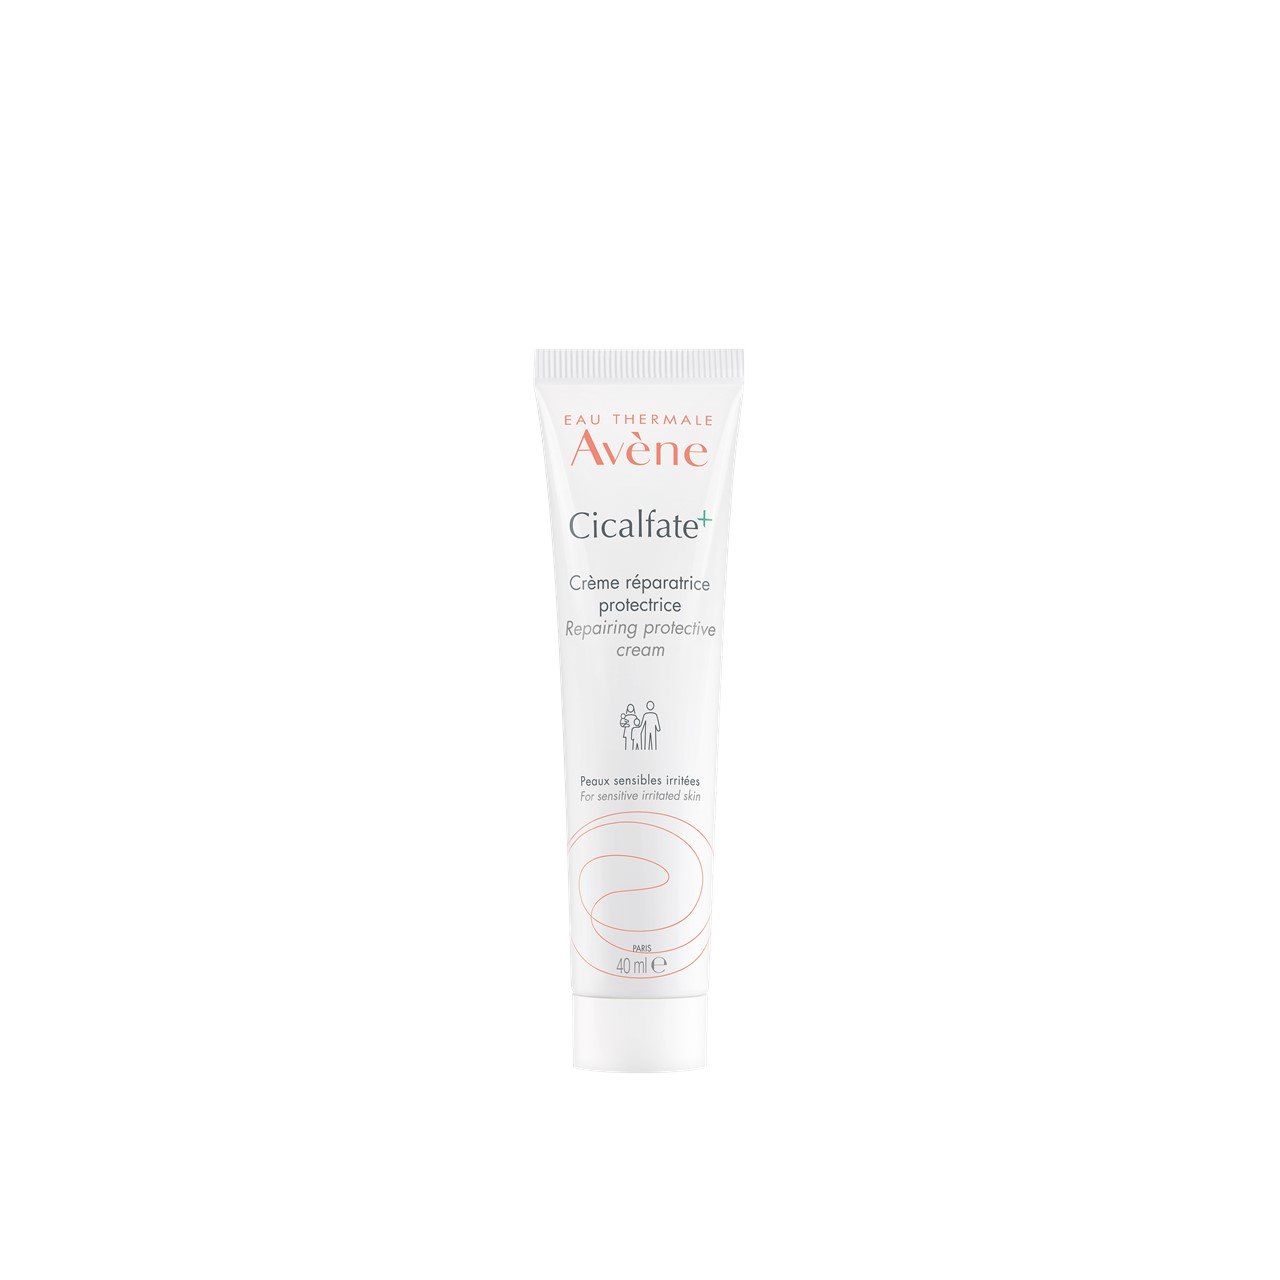 Avène Cicalfate+ Repairing Protective Cream 40ml (1.35fl oz)